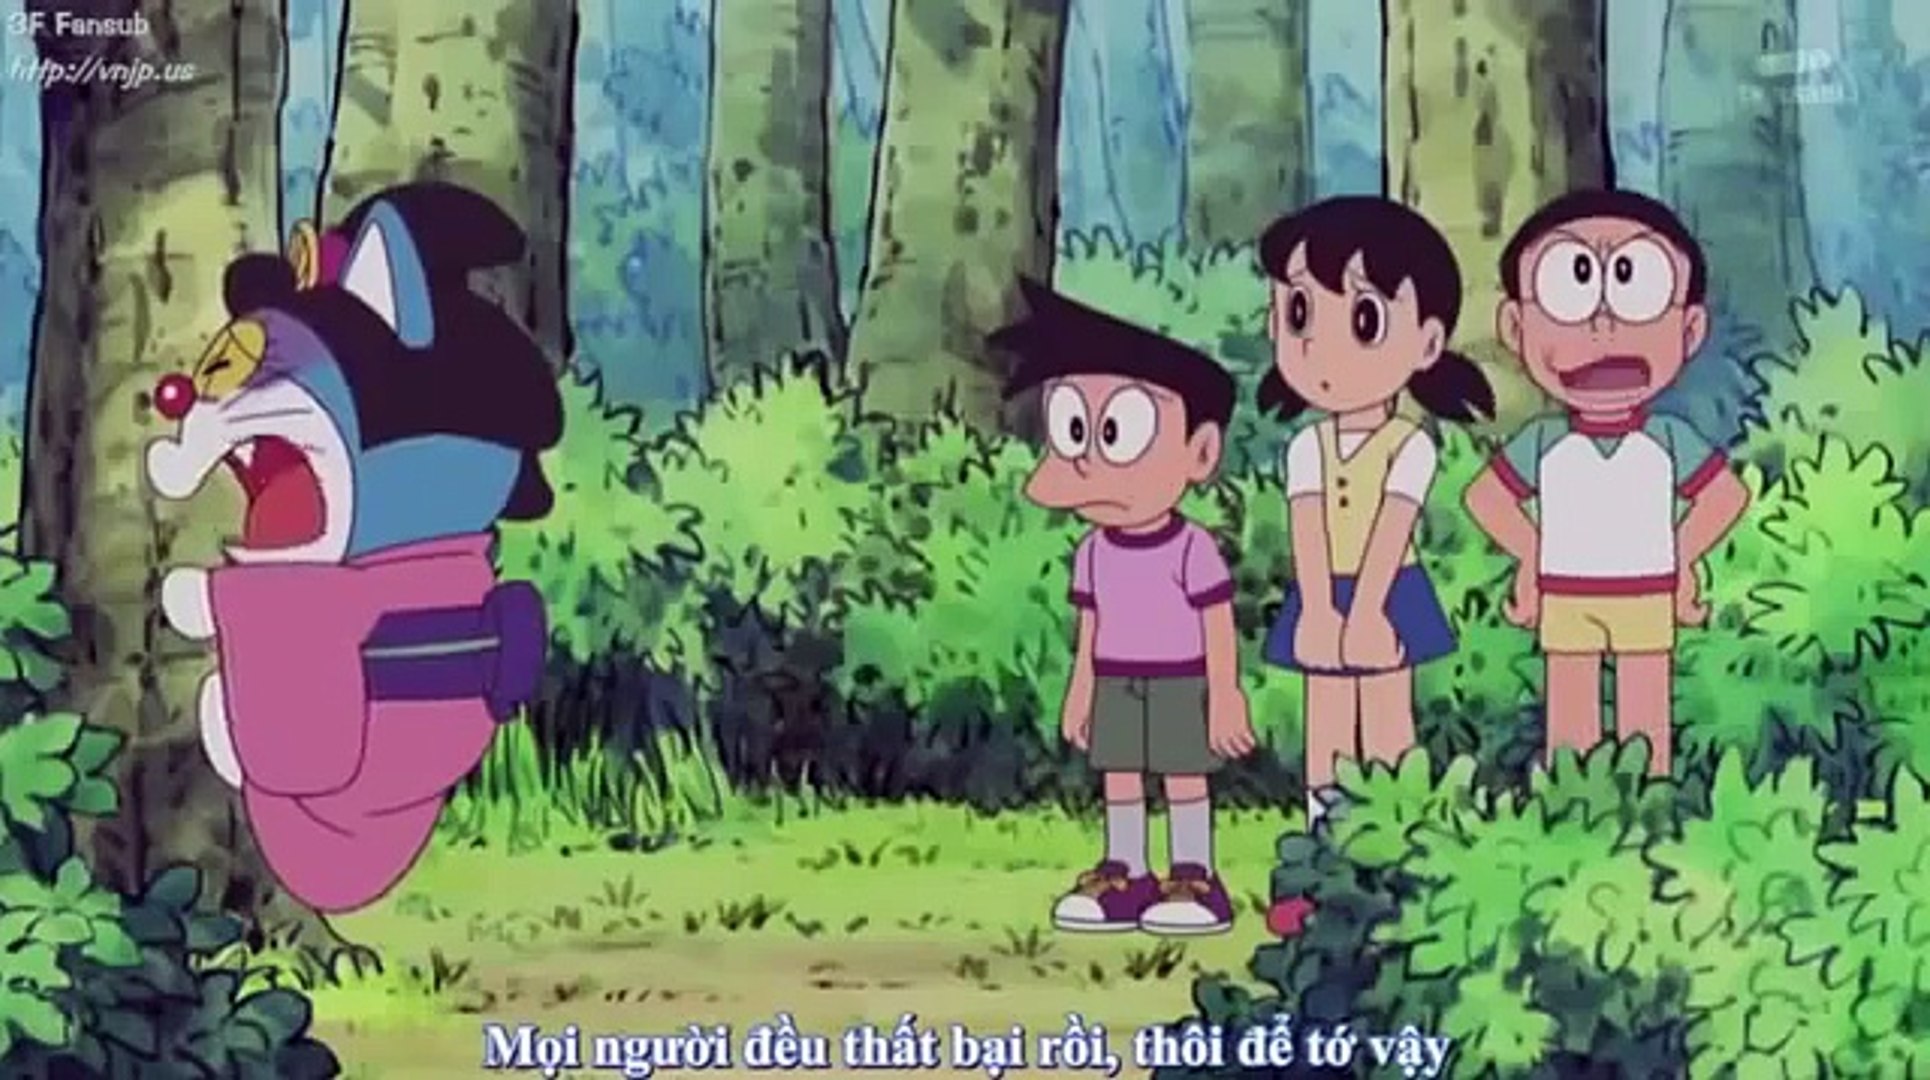 Doraemon Ep 247 ドラえもんアニメ 日本語 14 エピソード 247 Video Dailymotion